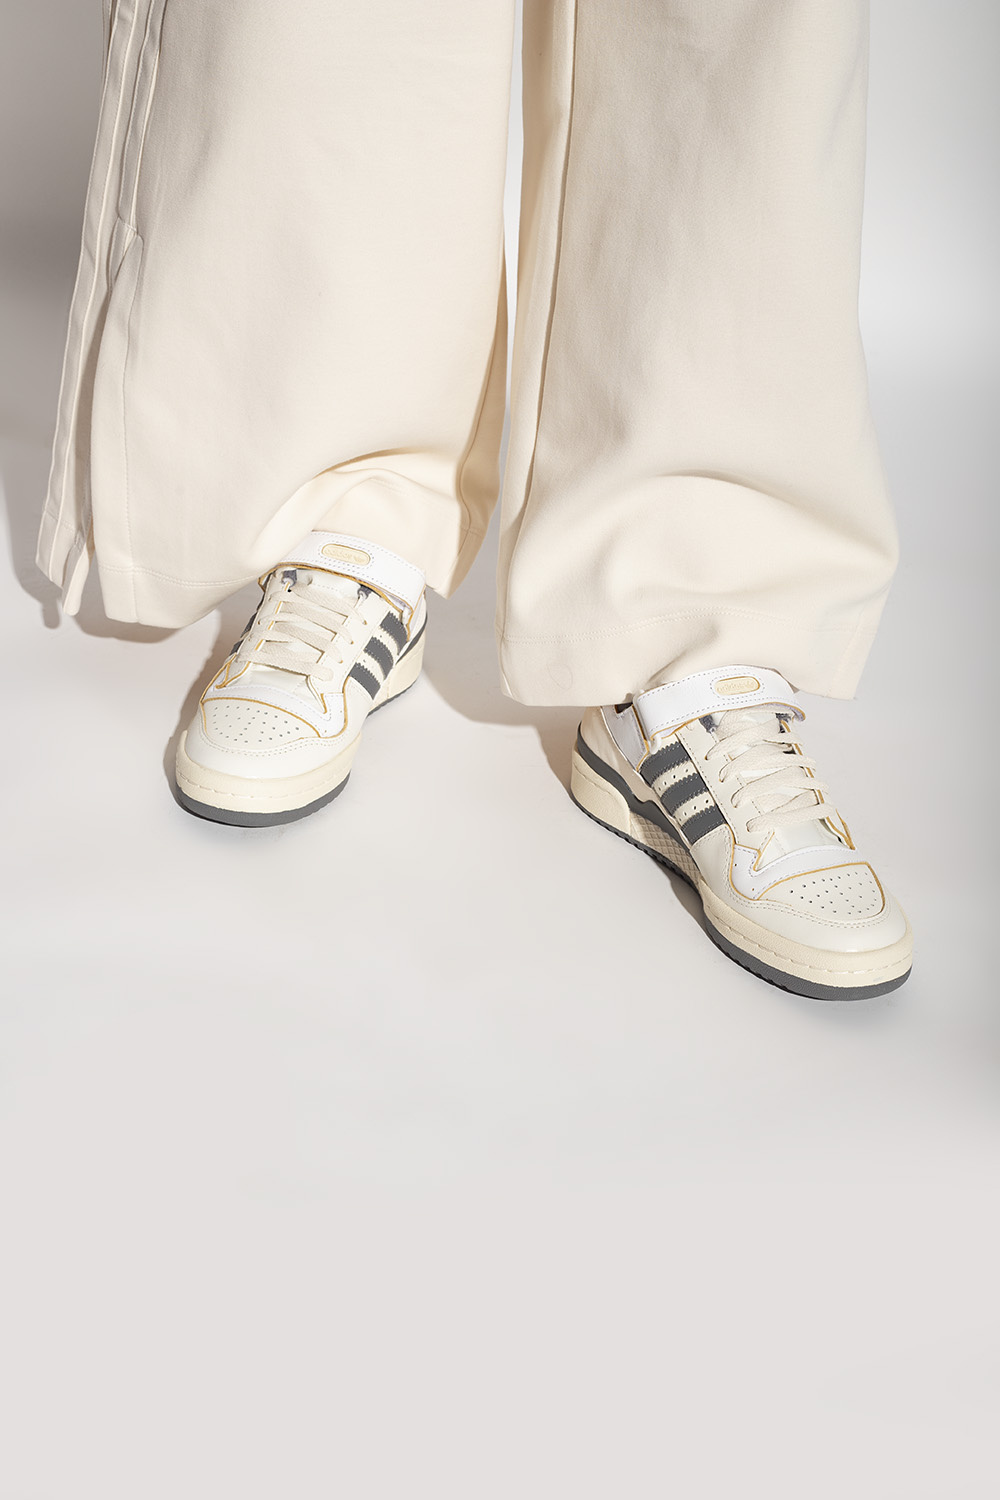 ADIDAS Originals 'FORUM 84 LOW W' sneakers | Women's Shoes | Vitkac